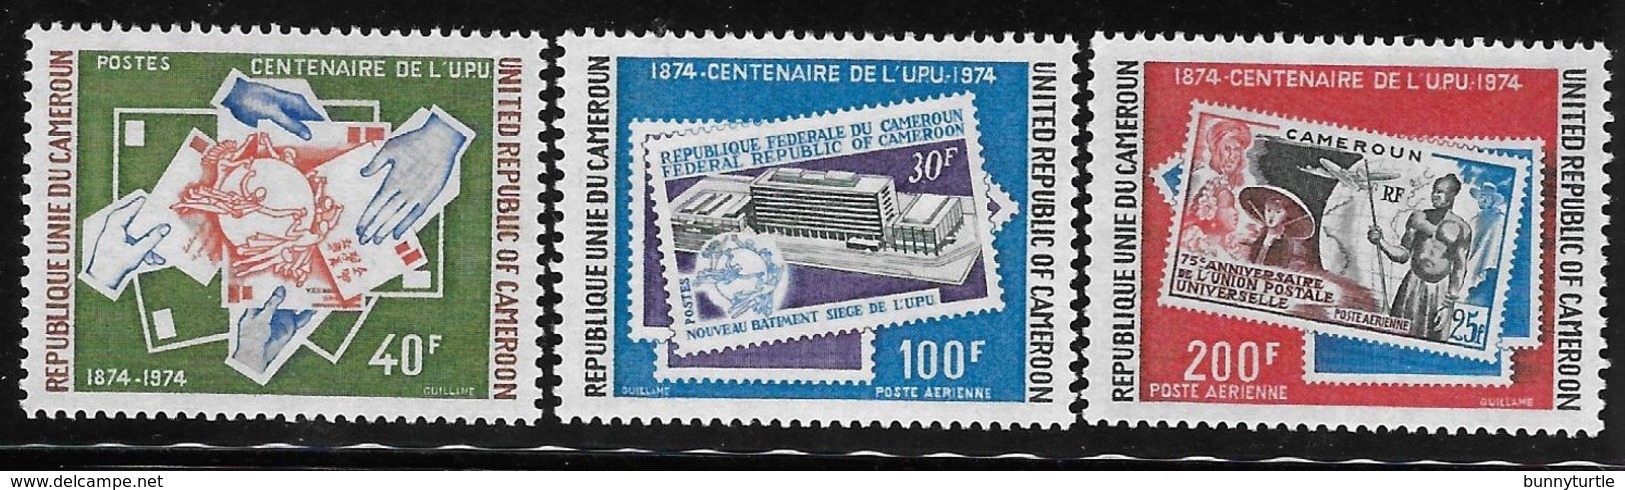 Cameroun Cameroon 1974 Cent Of The UPU MNH - Cameroon (1960-...)